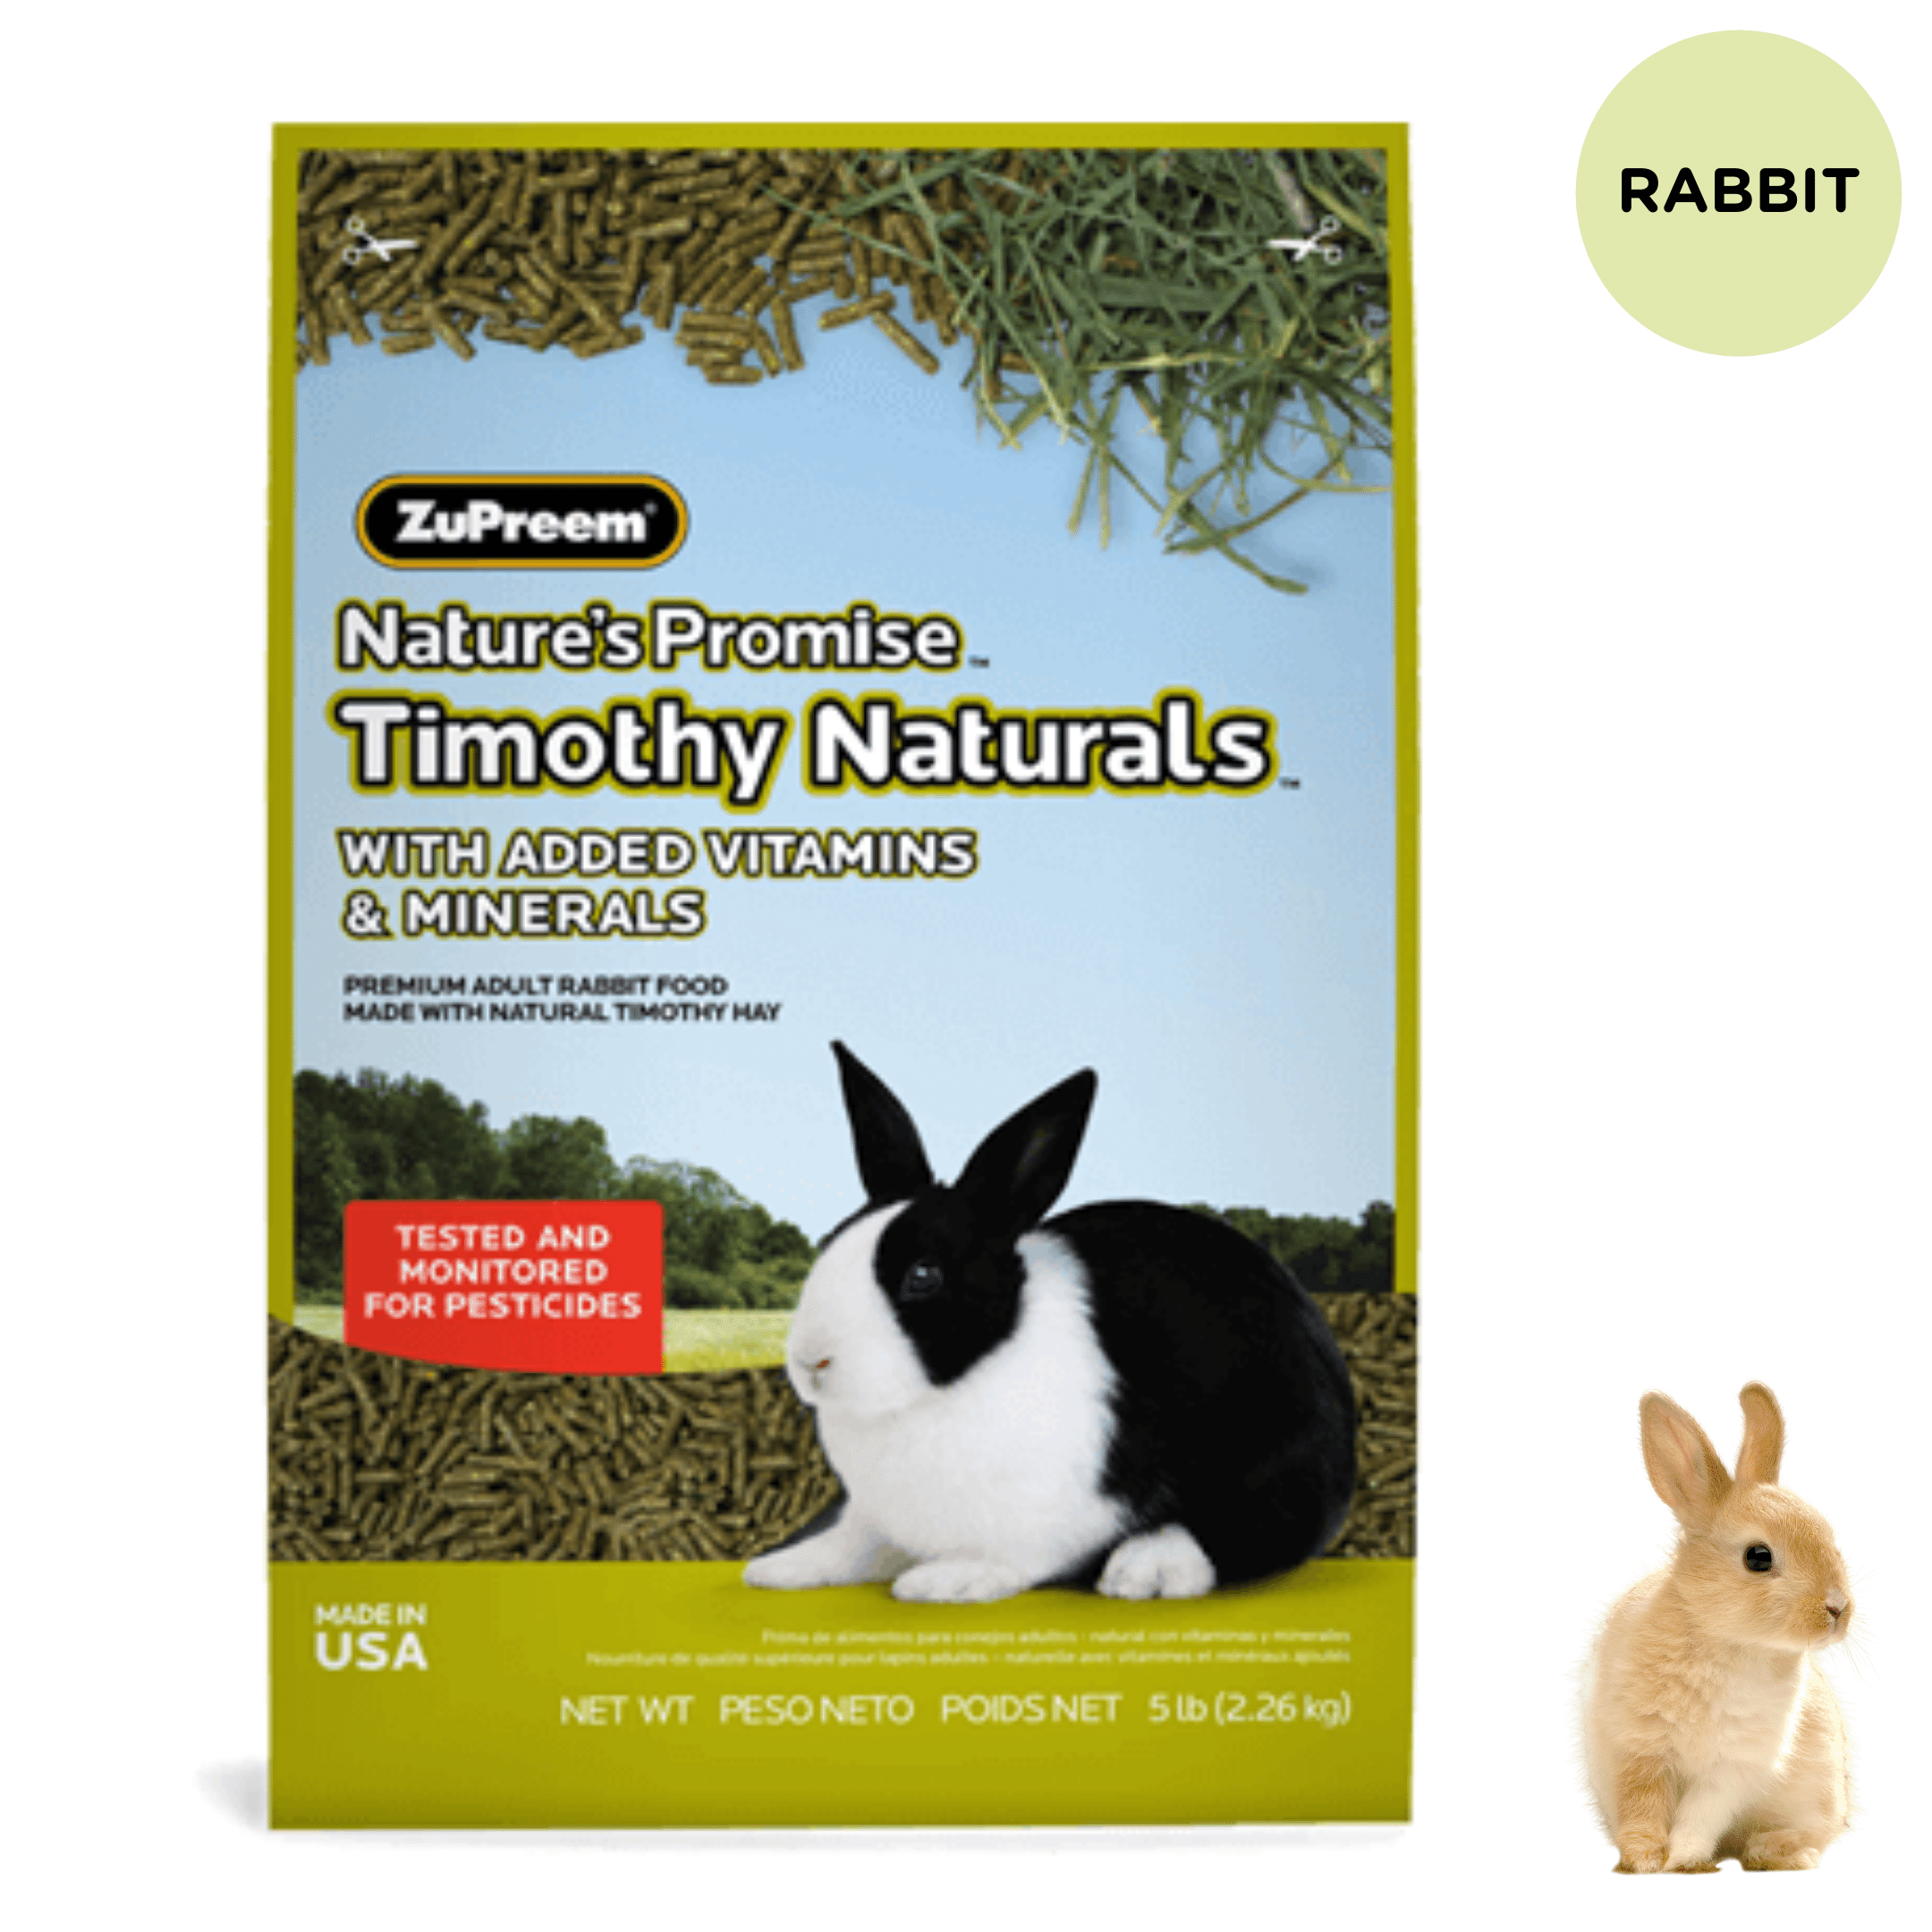 Zupreem - Nature's Promise - Rabbit Food